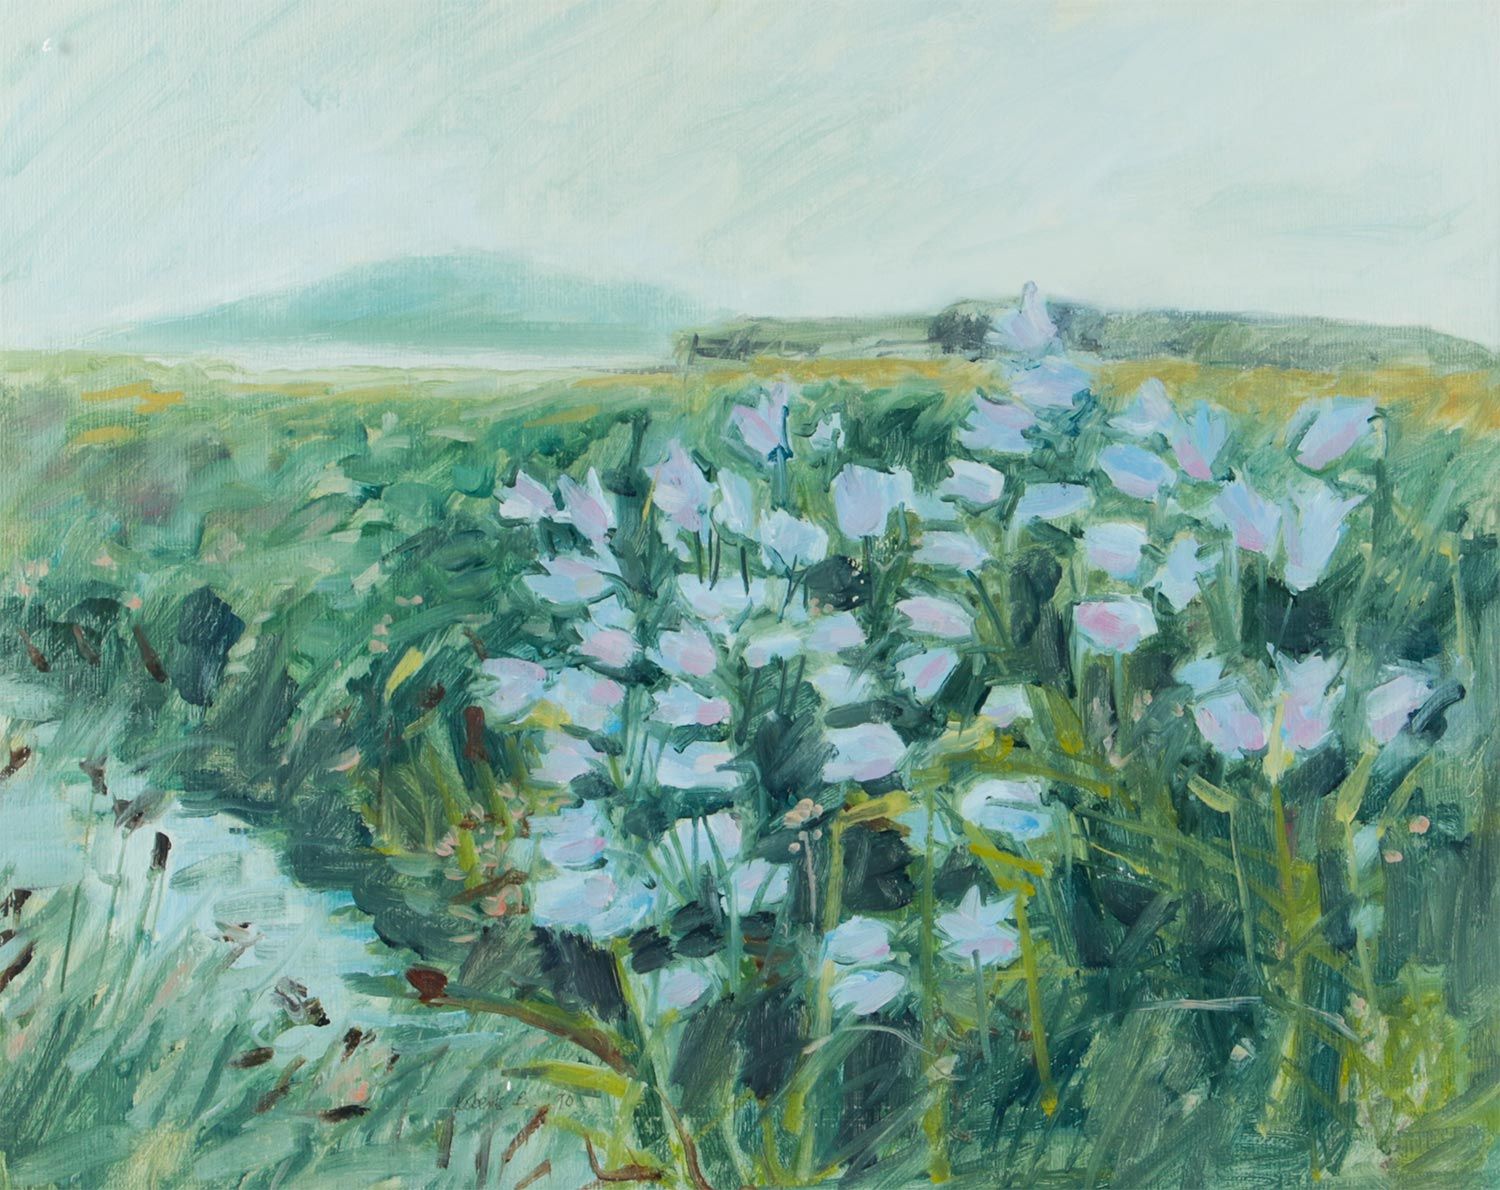 WILD FLOWERS BY A STREAM by Robert Bottom RUA at Ross's Online Art Auctions